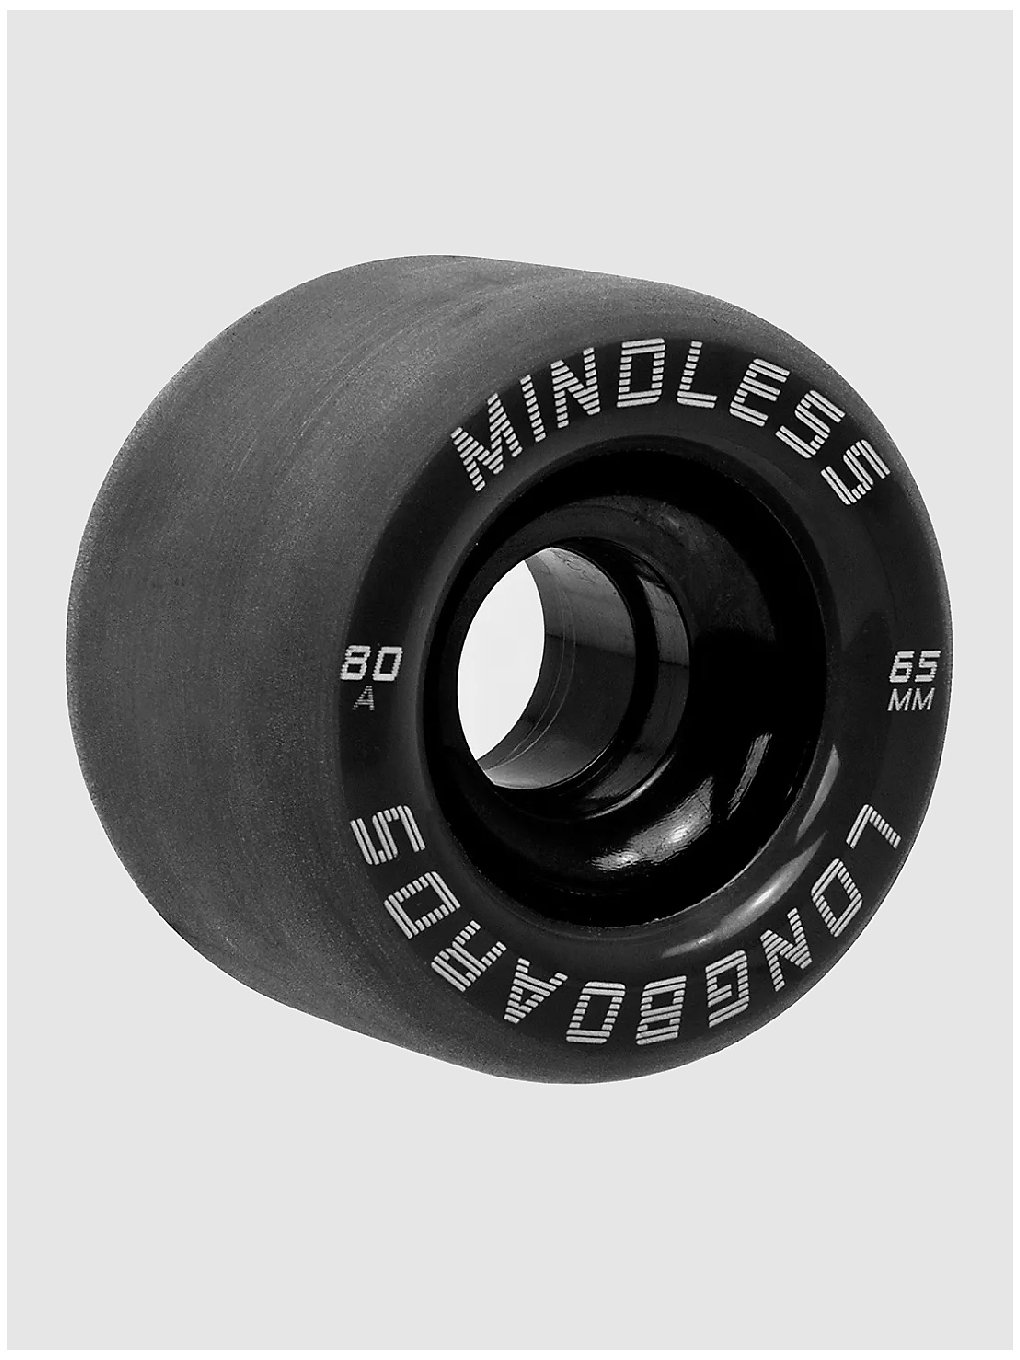 Mindless Longboards Viper 65mm 82a Wheels black kaufen